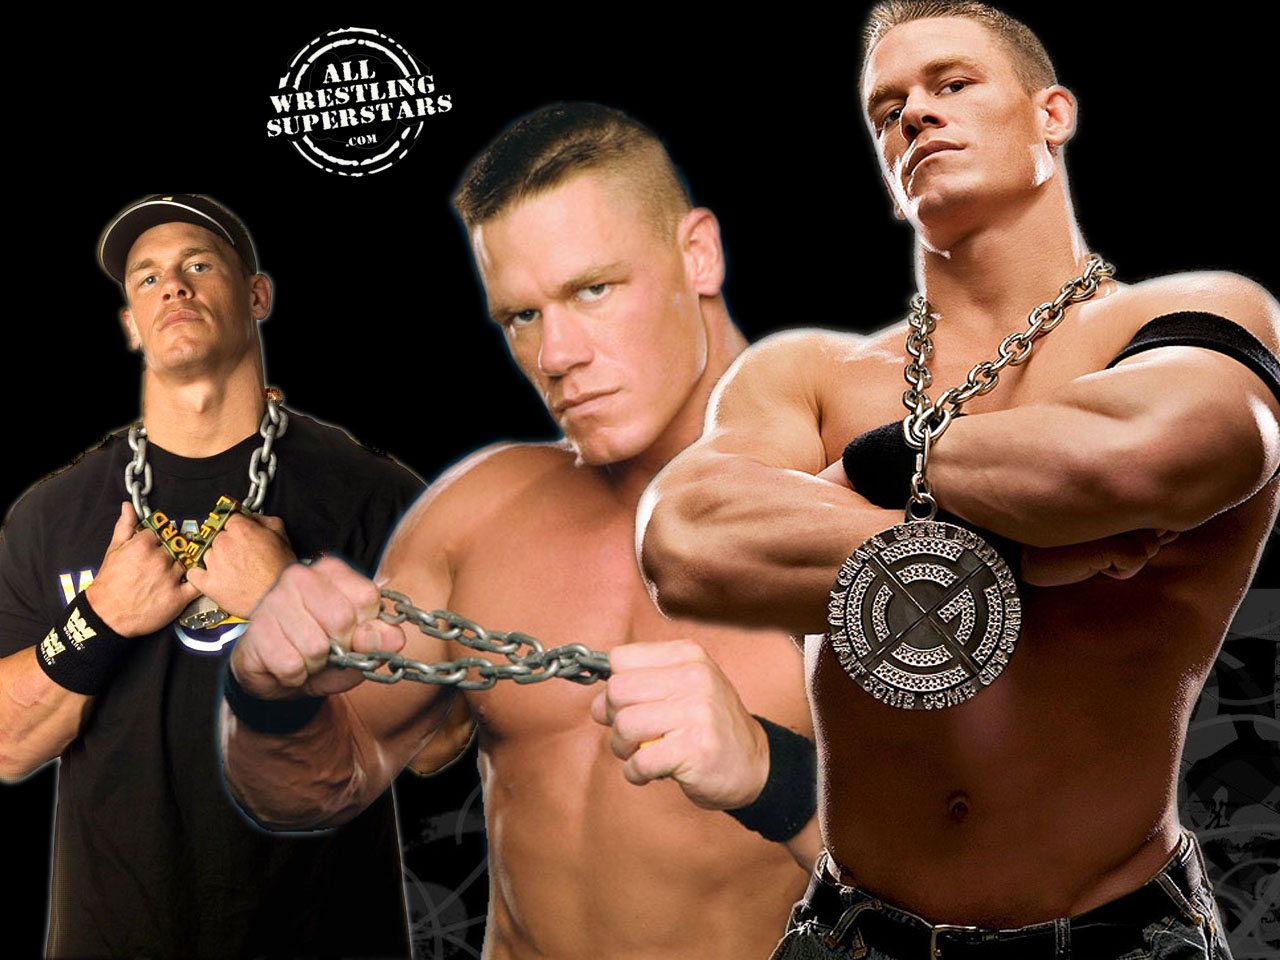 John Cena Wallpaper Wwe Superstars